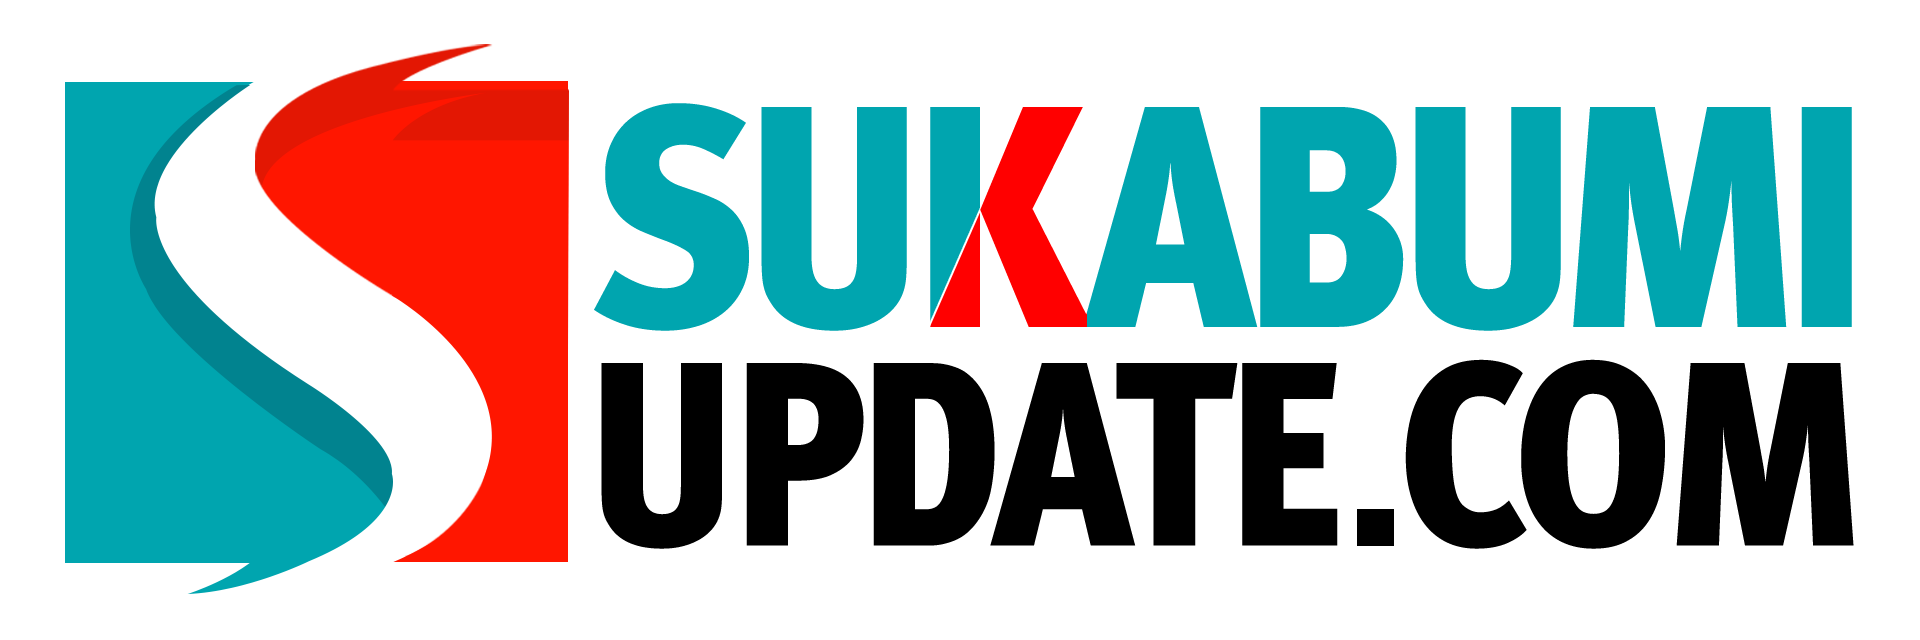 Sukabumi Update